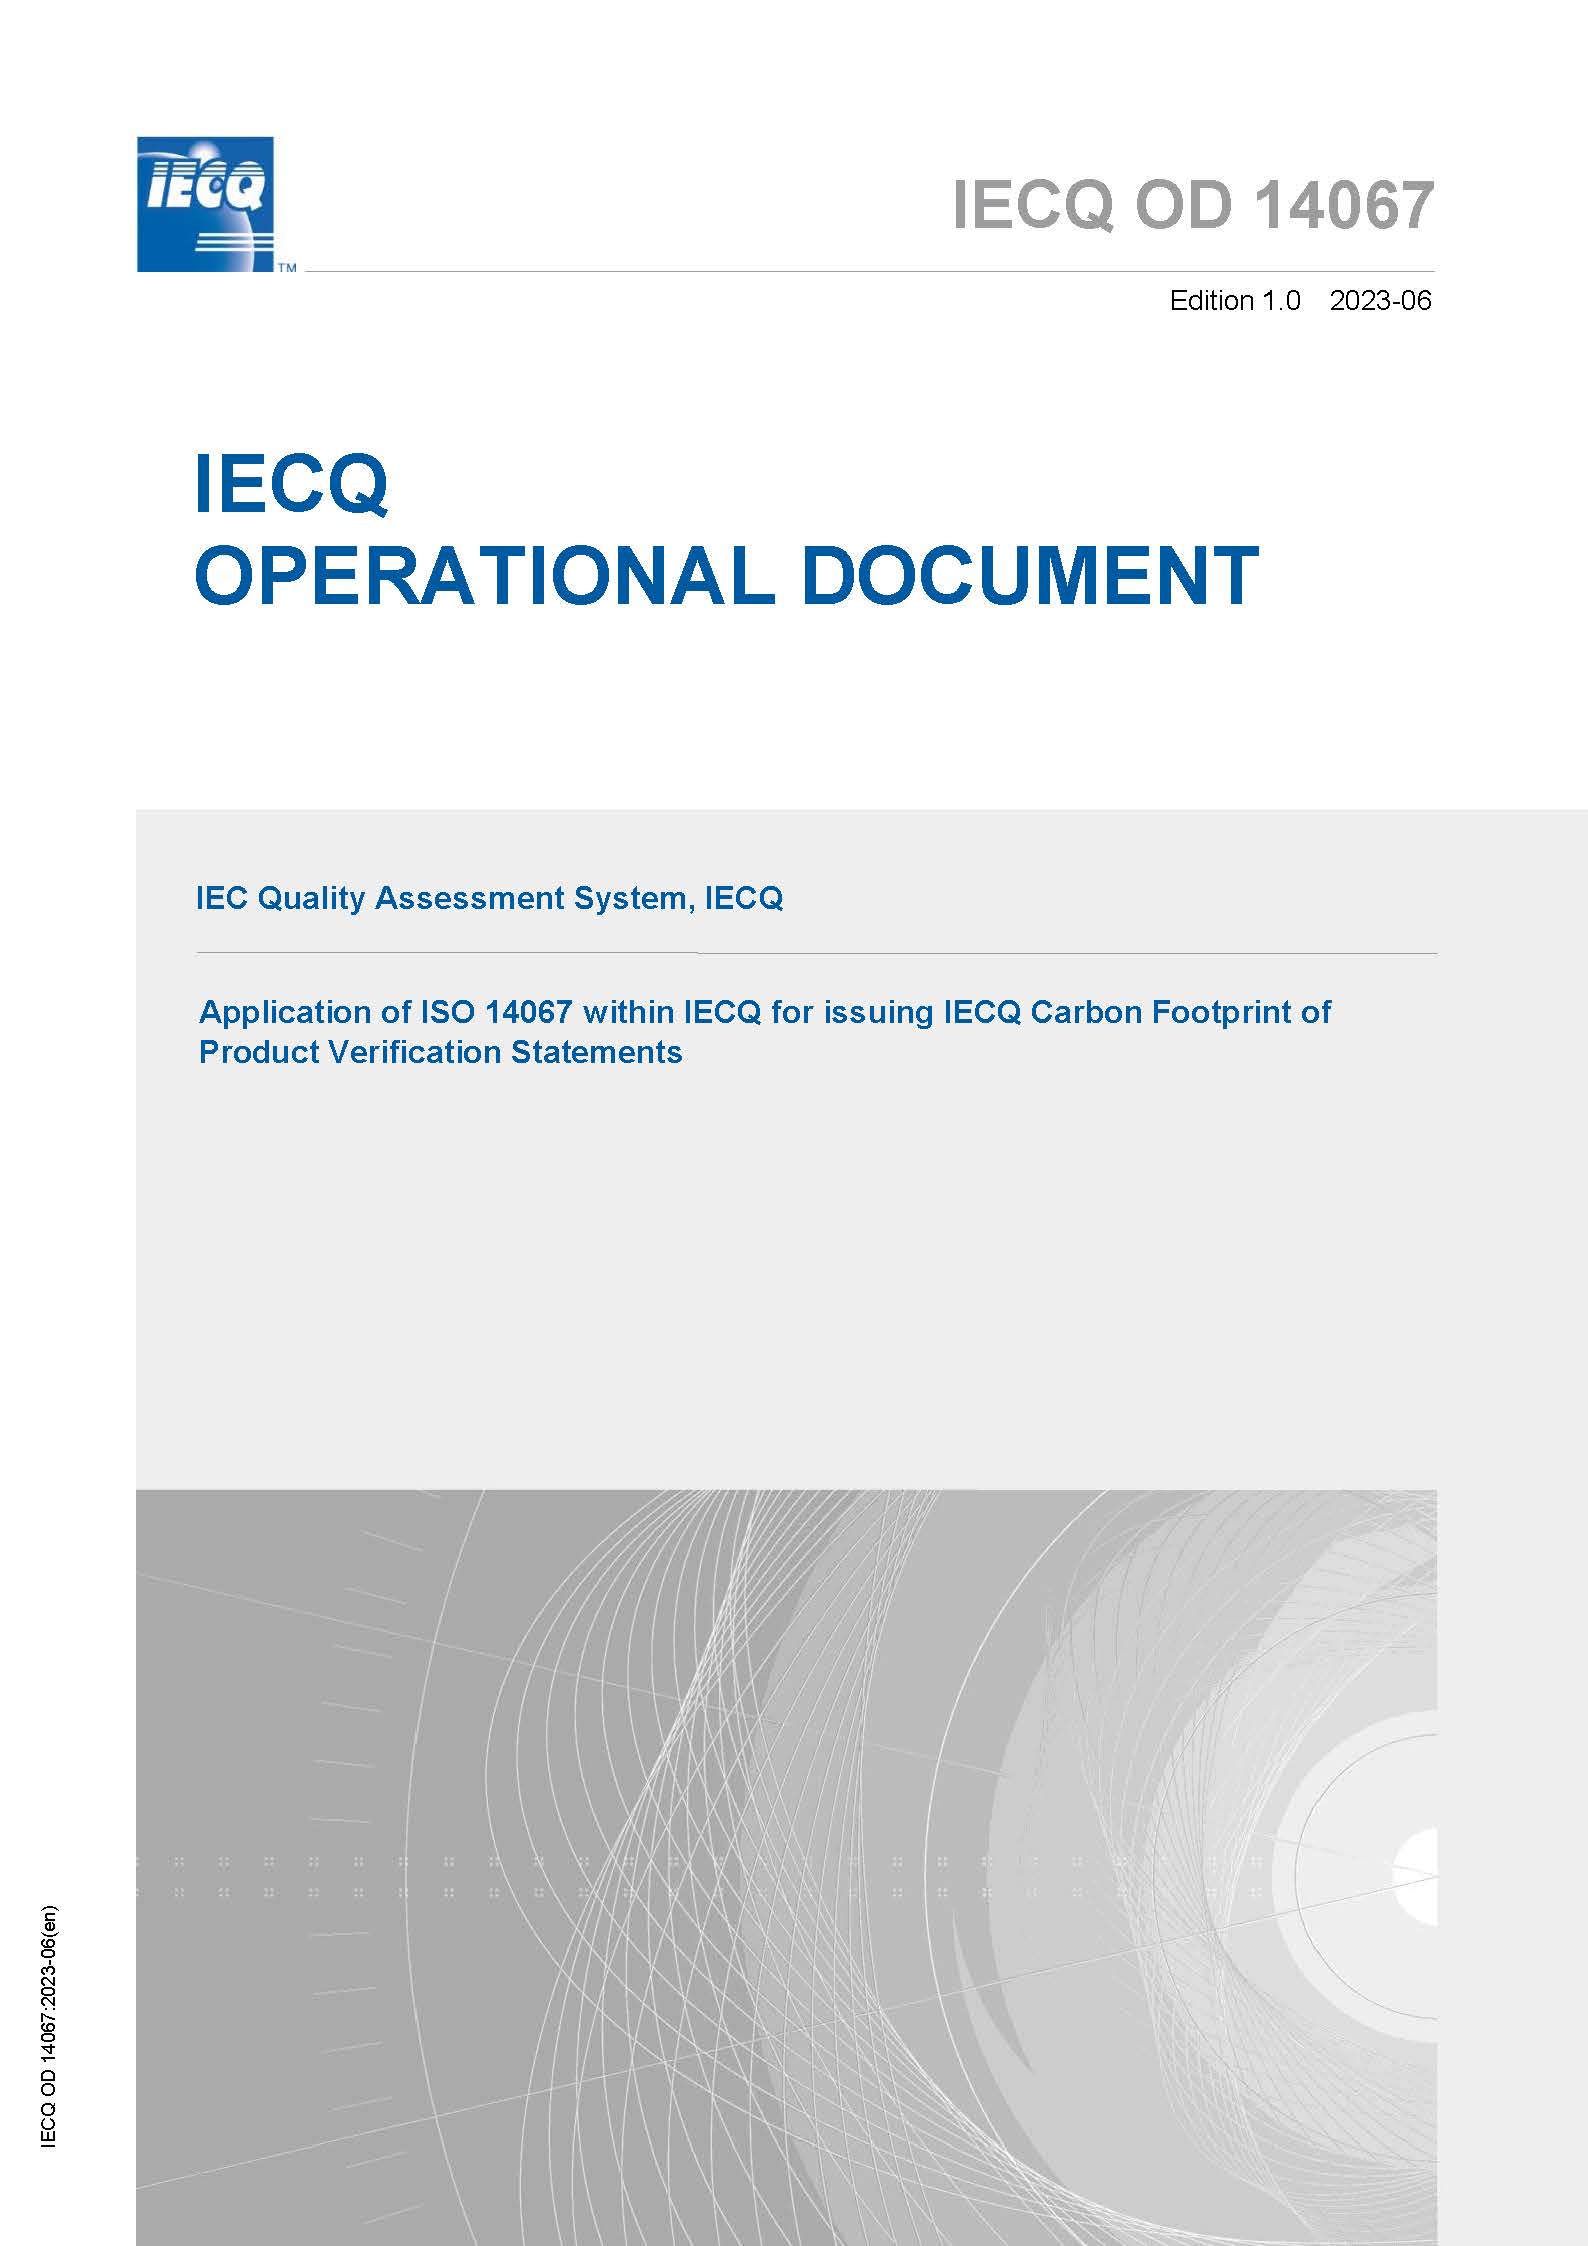 IECQ Rules of Procedure - Part 6: IECQ ITL Scheme - Independent Testing Laboratory Assessment Program Requirements